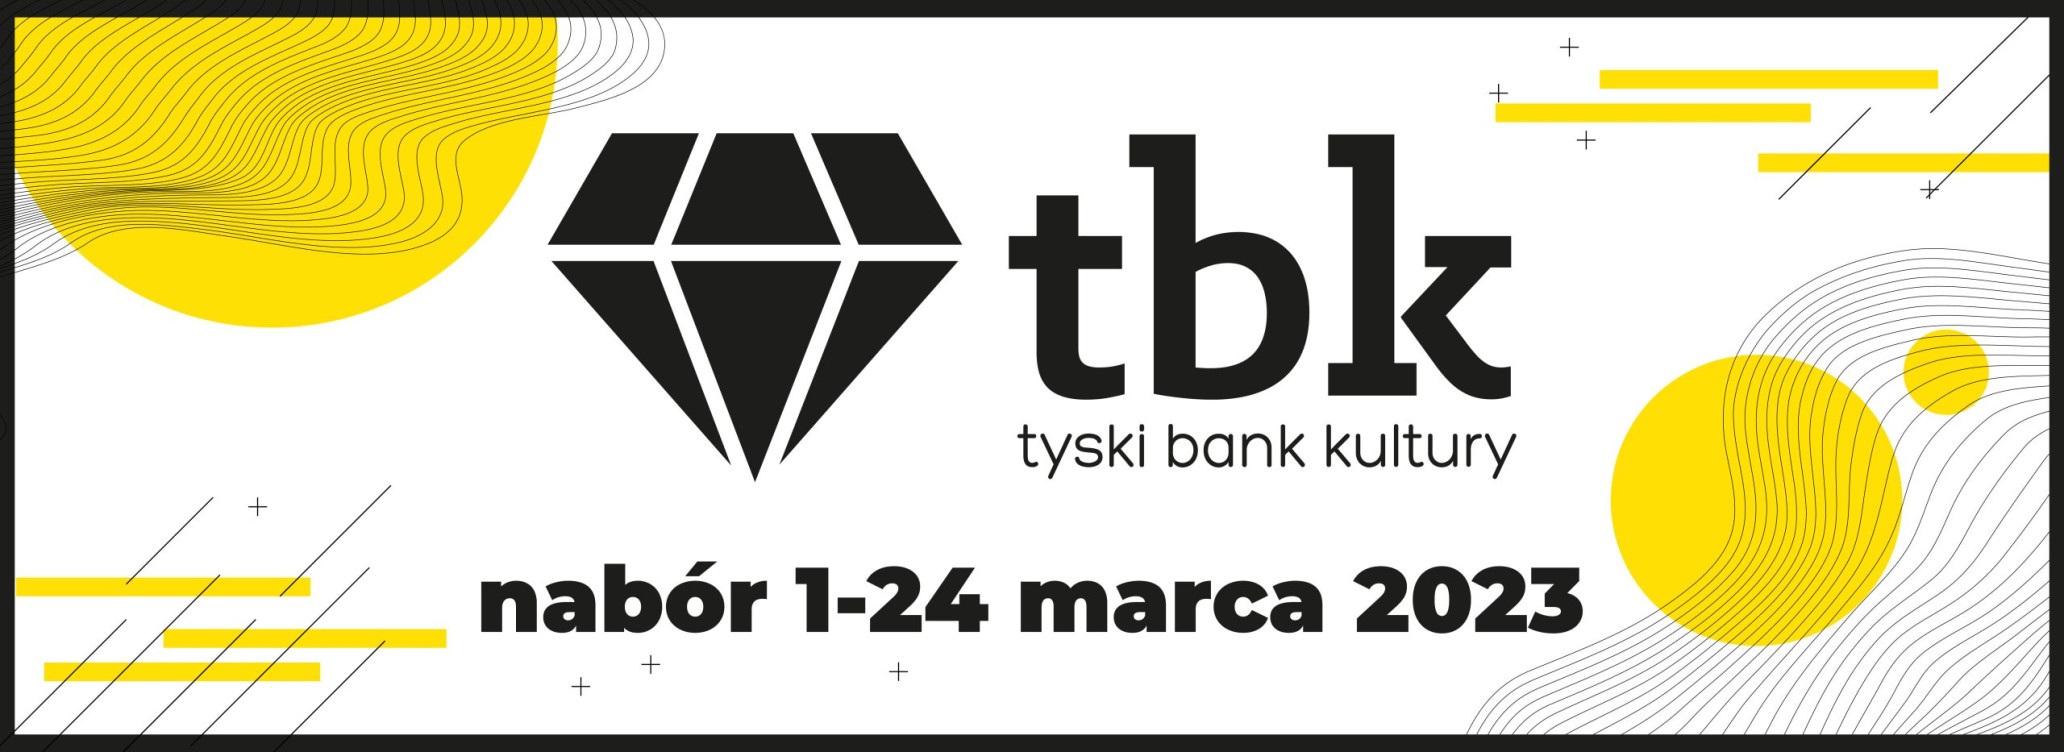 Tyski bank kultury logo